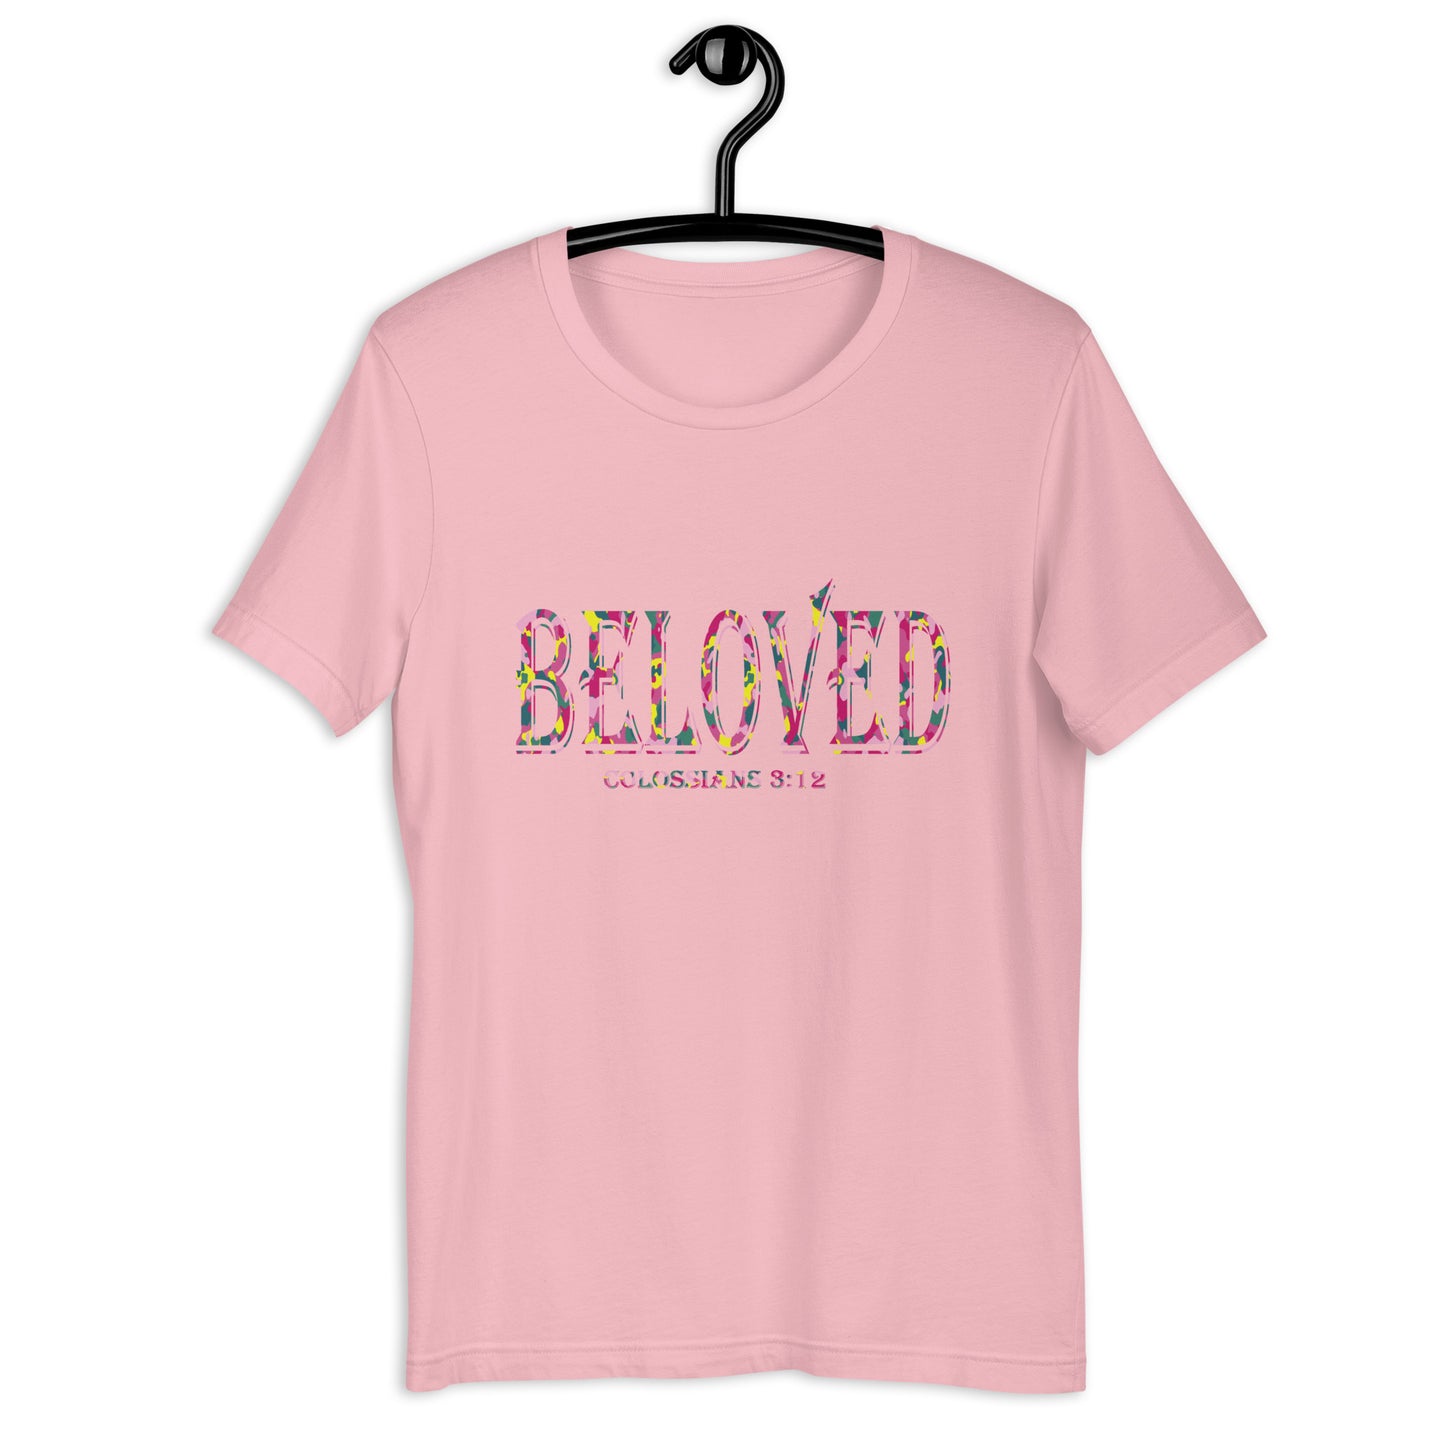 Colossians 3:12 Beloved T-shirt pink on hanger